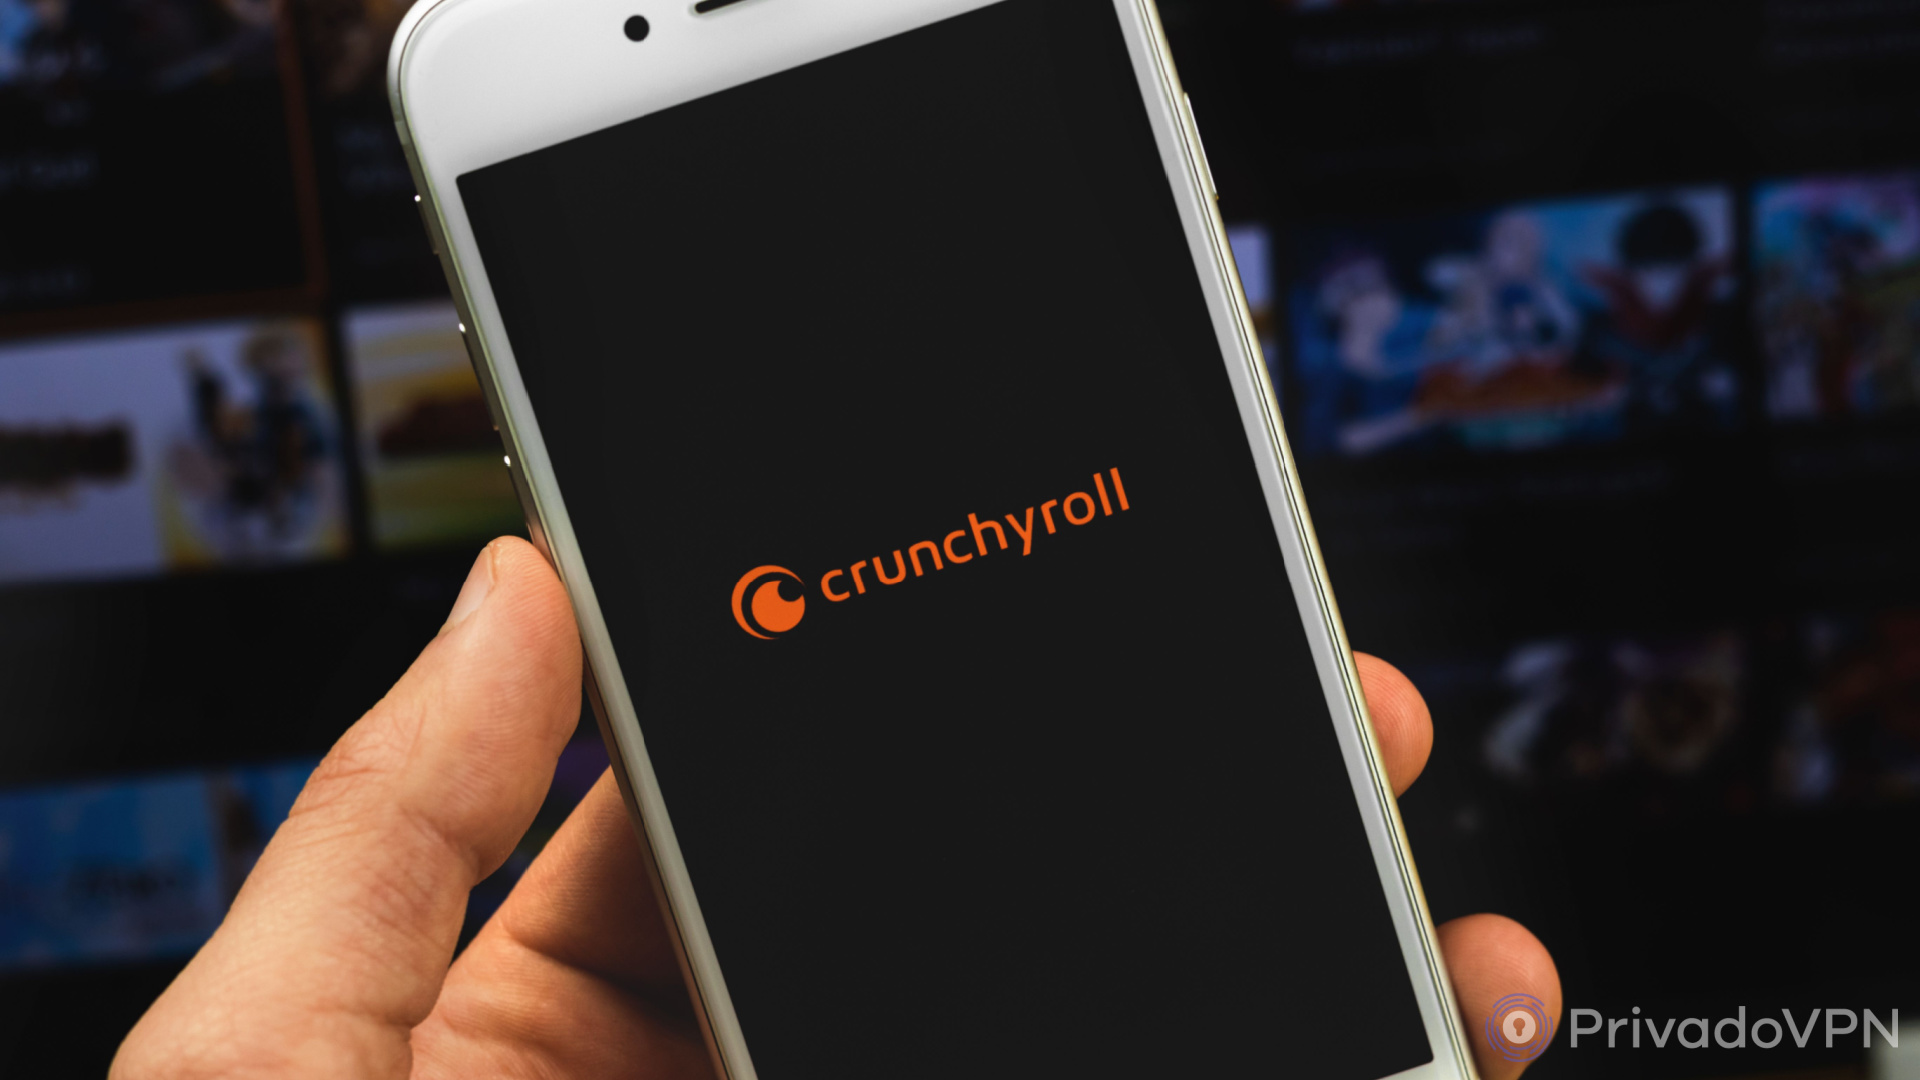 Crunchyroll – The Feature Presentation